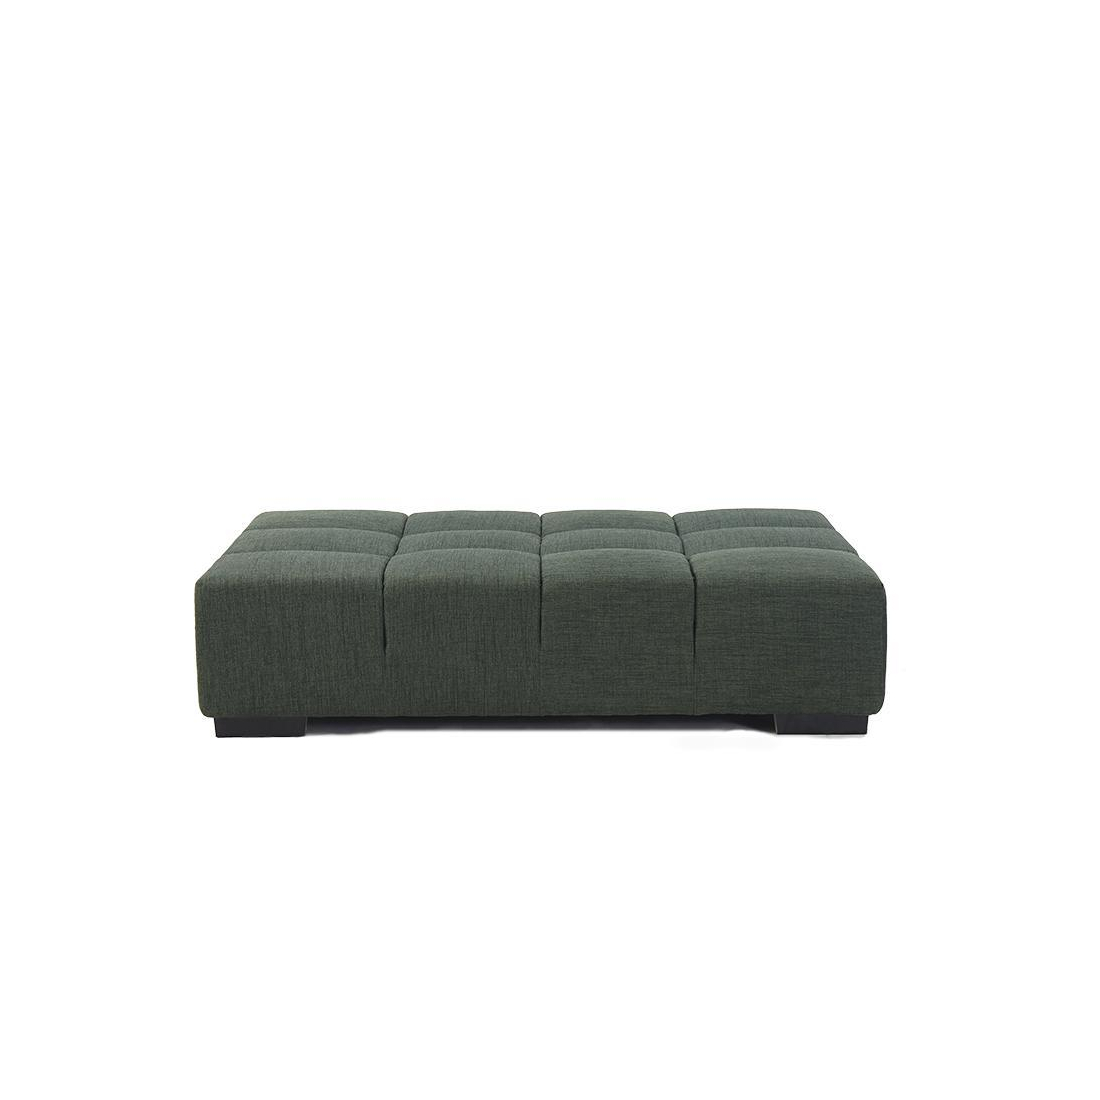 Tufted Sofa | TF026 Extra Large Side Ottoman